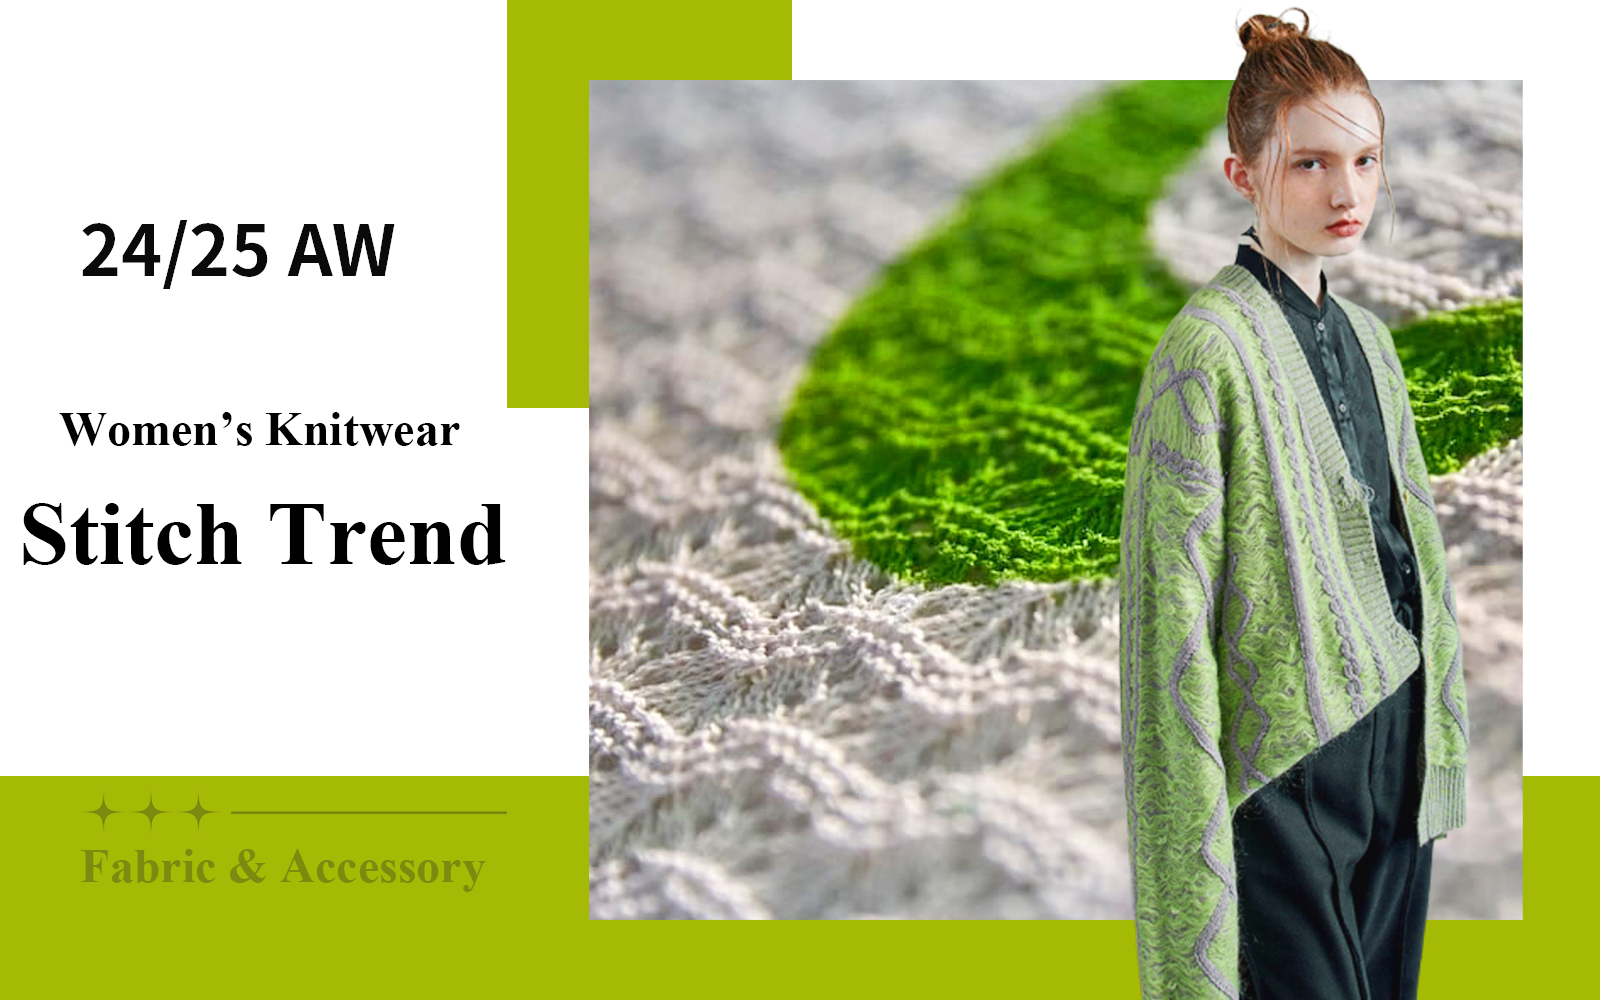 A/W 24/25 Stitch Trend for Women's Knitwear